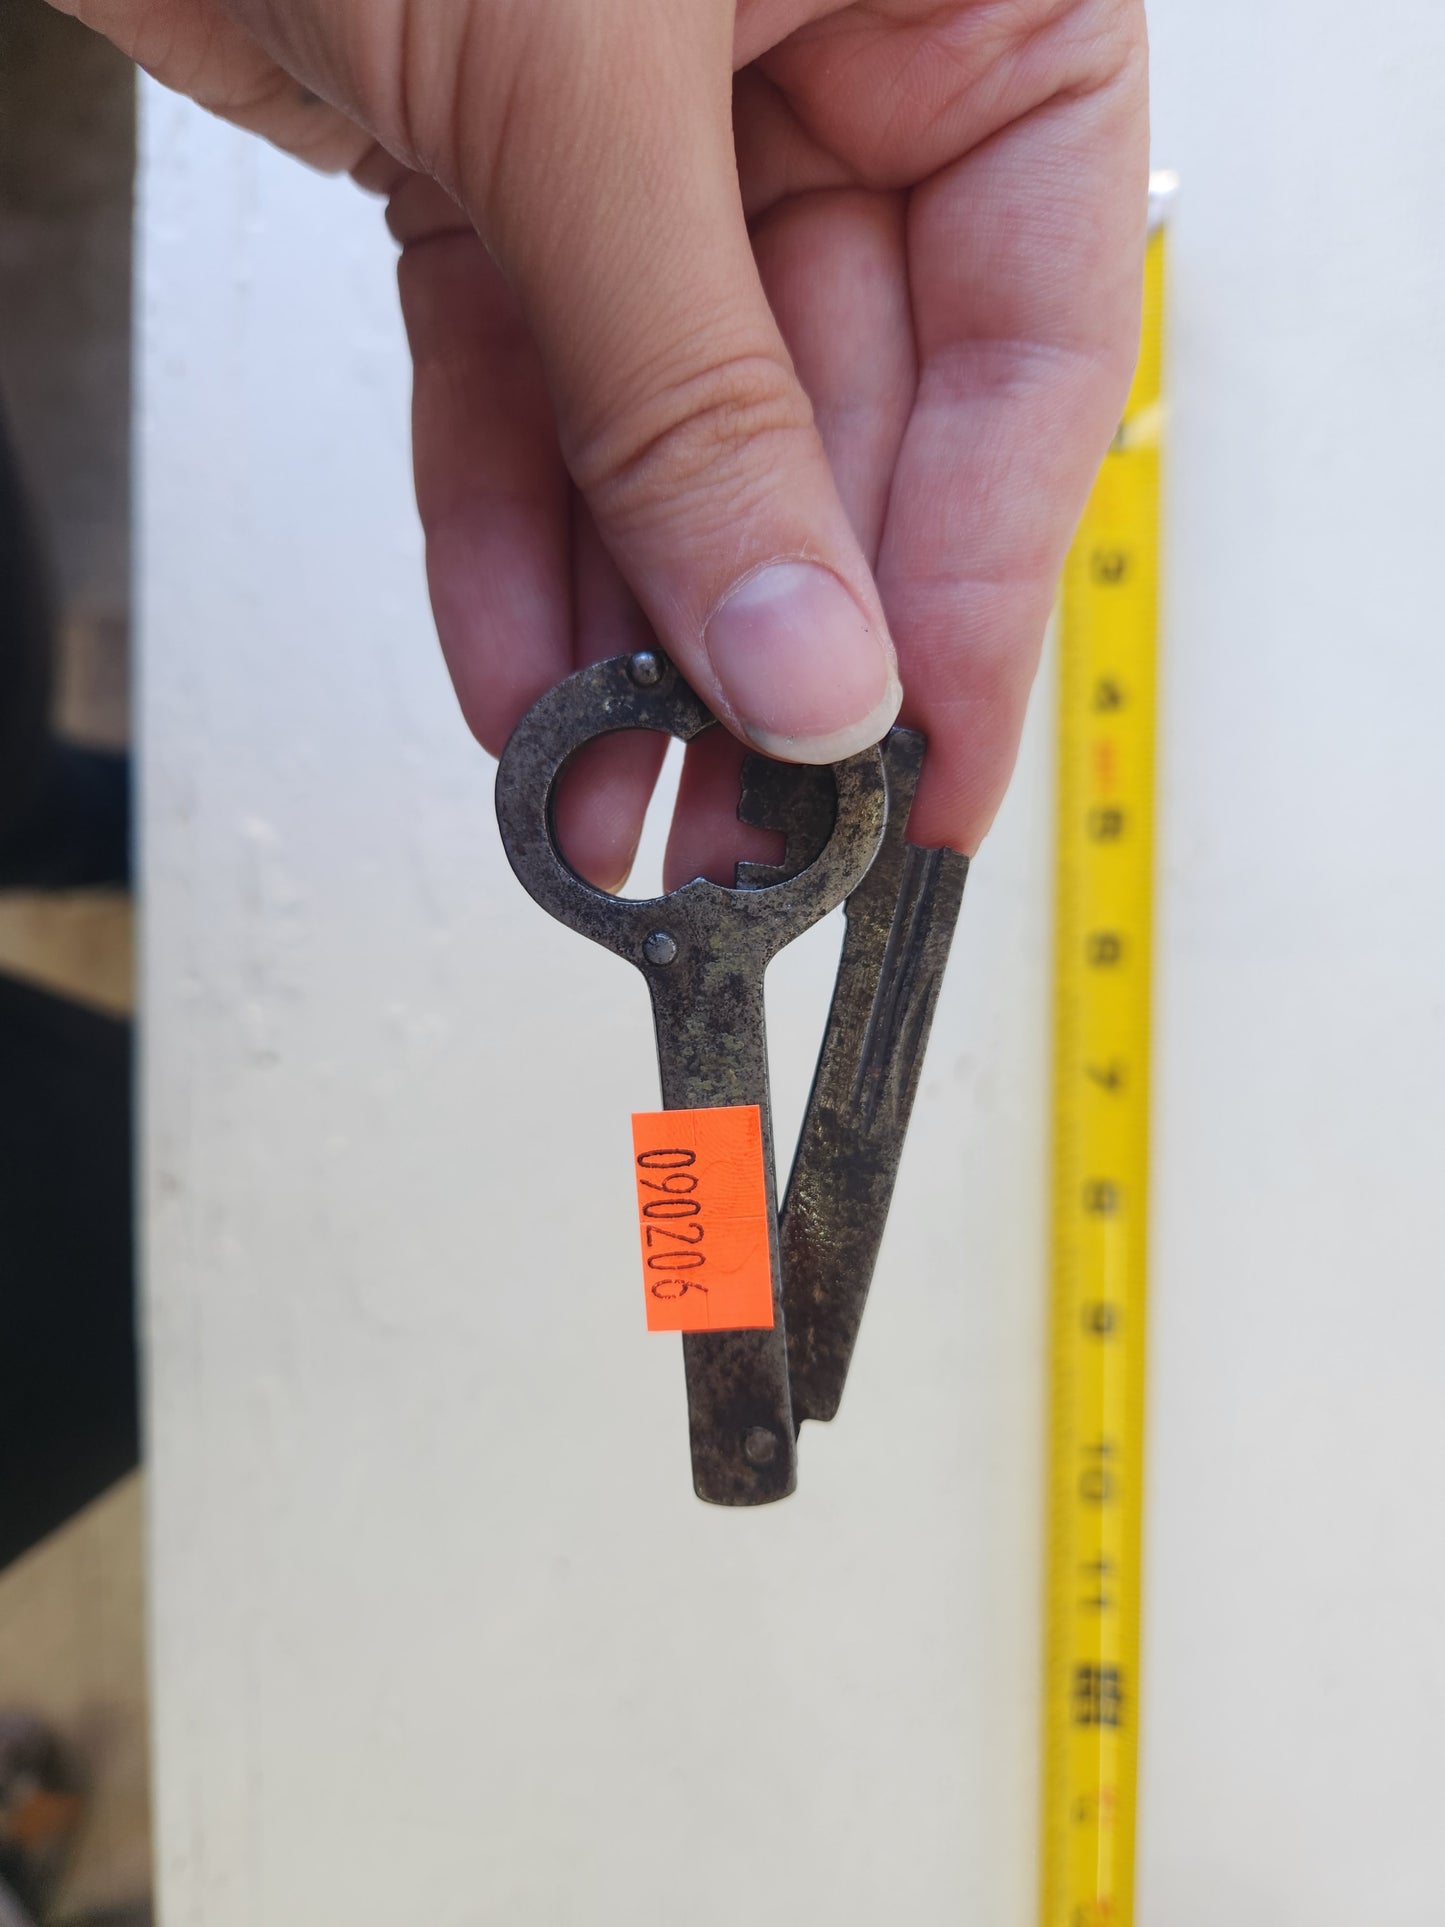 Large Antique Folding Door Key, Victorian Era Iron Folding Skeleton Key,Branford  090206